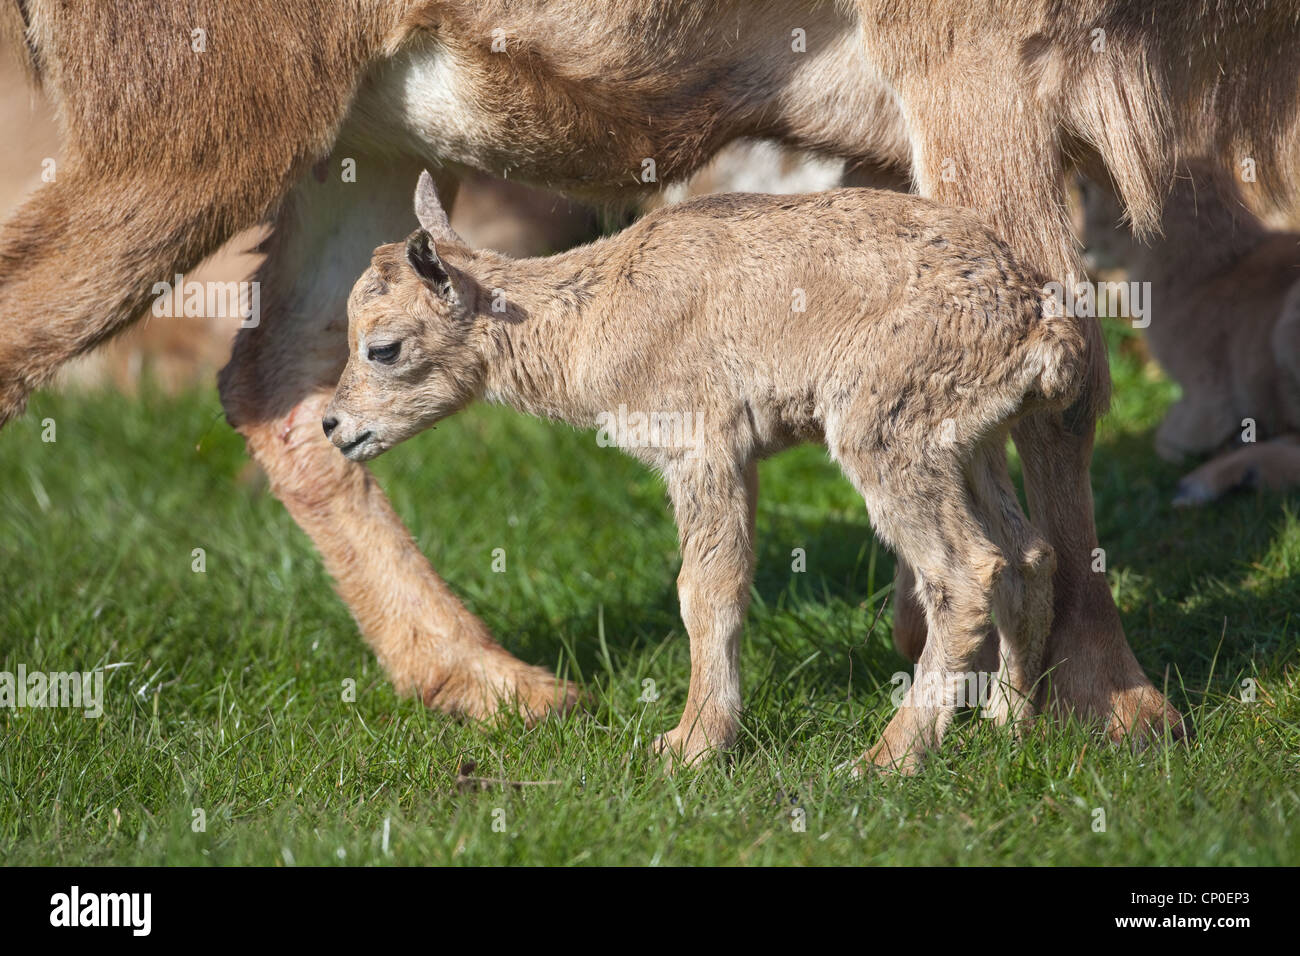 Barbary Sheep or Aoudad (Ammotragus lervia).). Lamb or young alongside mother. Stock Photo